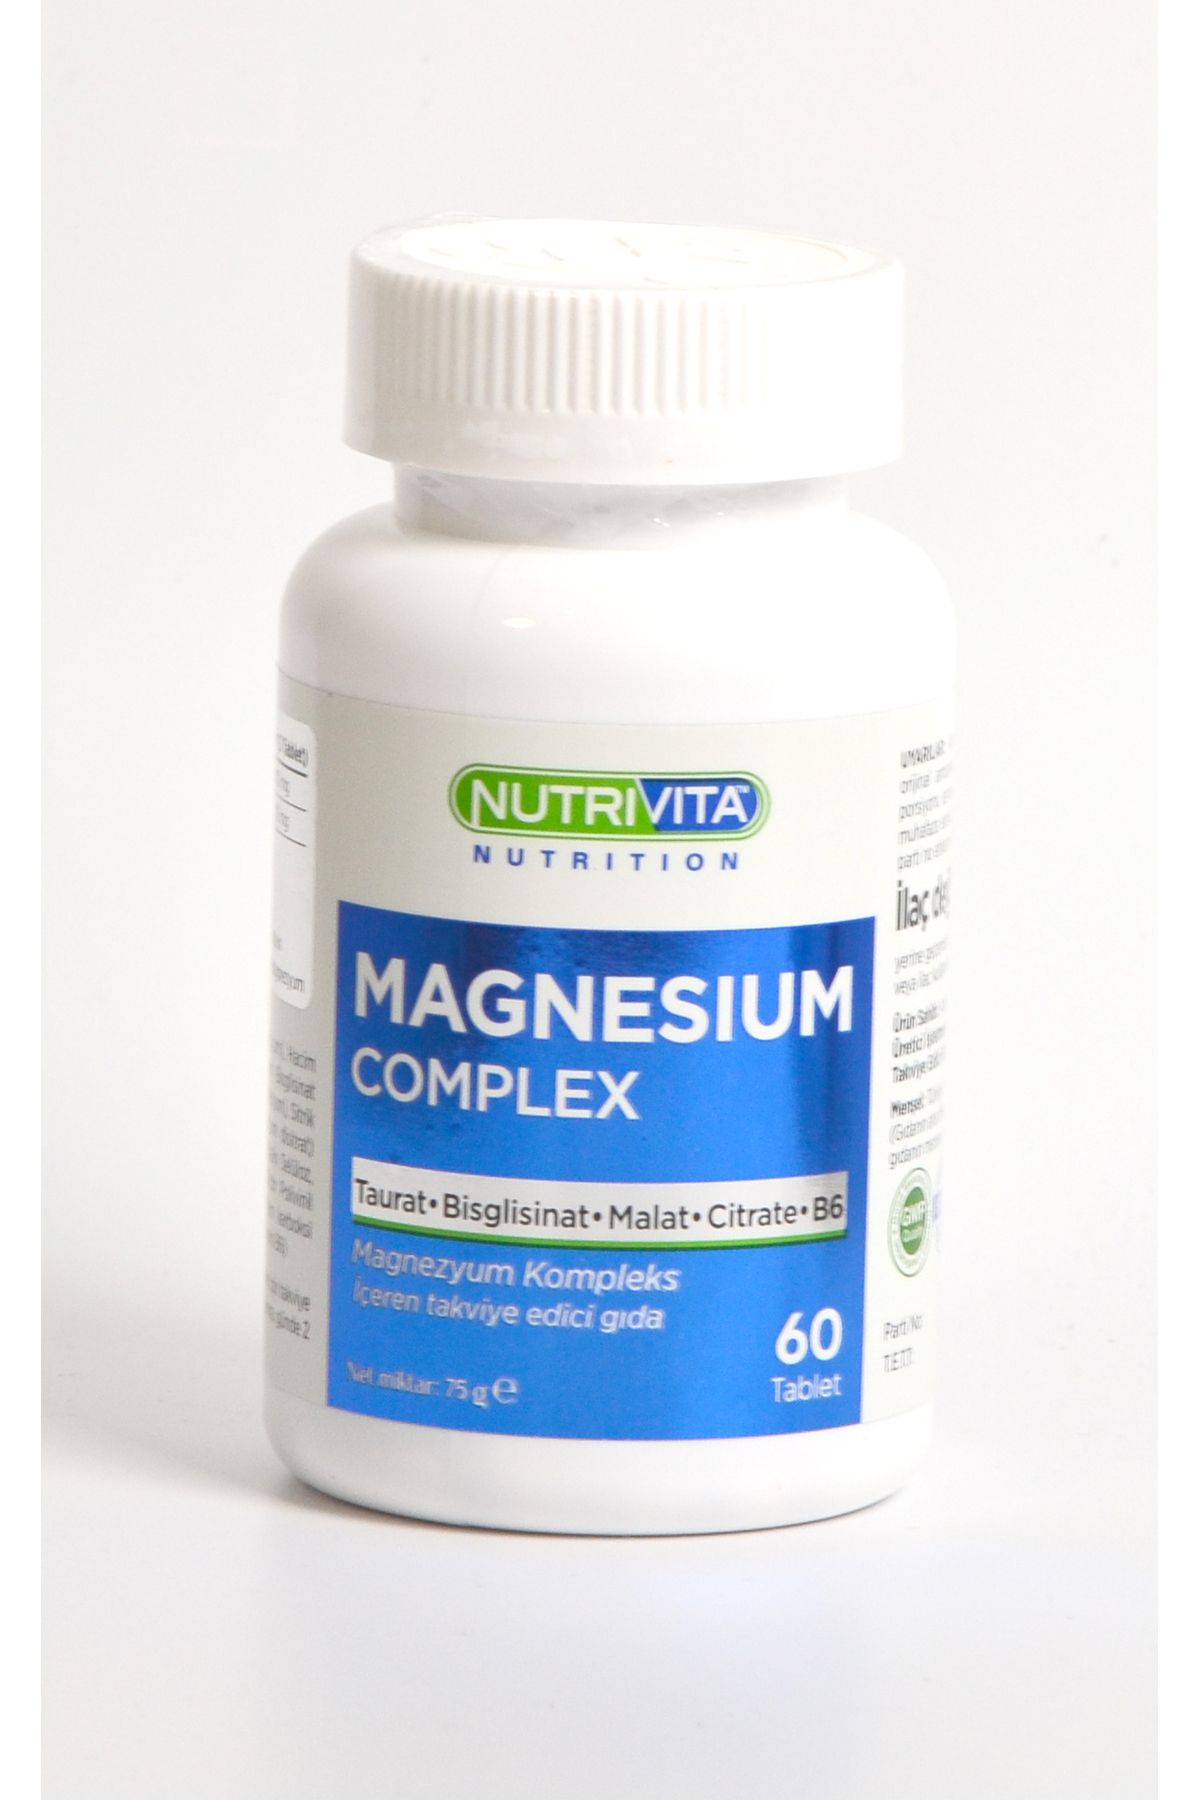 Nutrivita Nutrition 60 Tablet Magnezyum Complex Vitamin B6